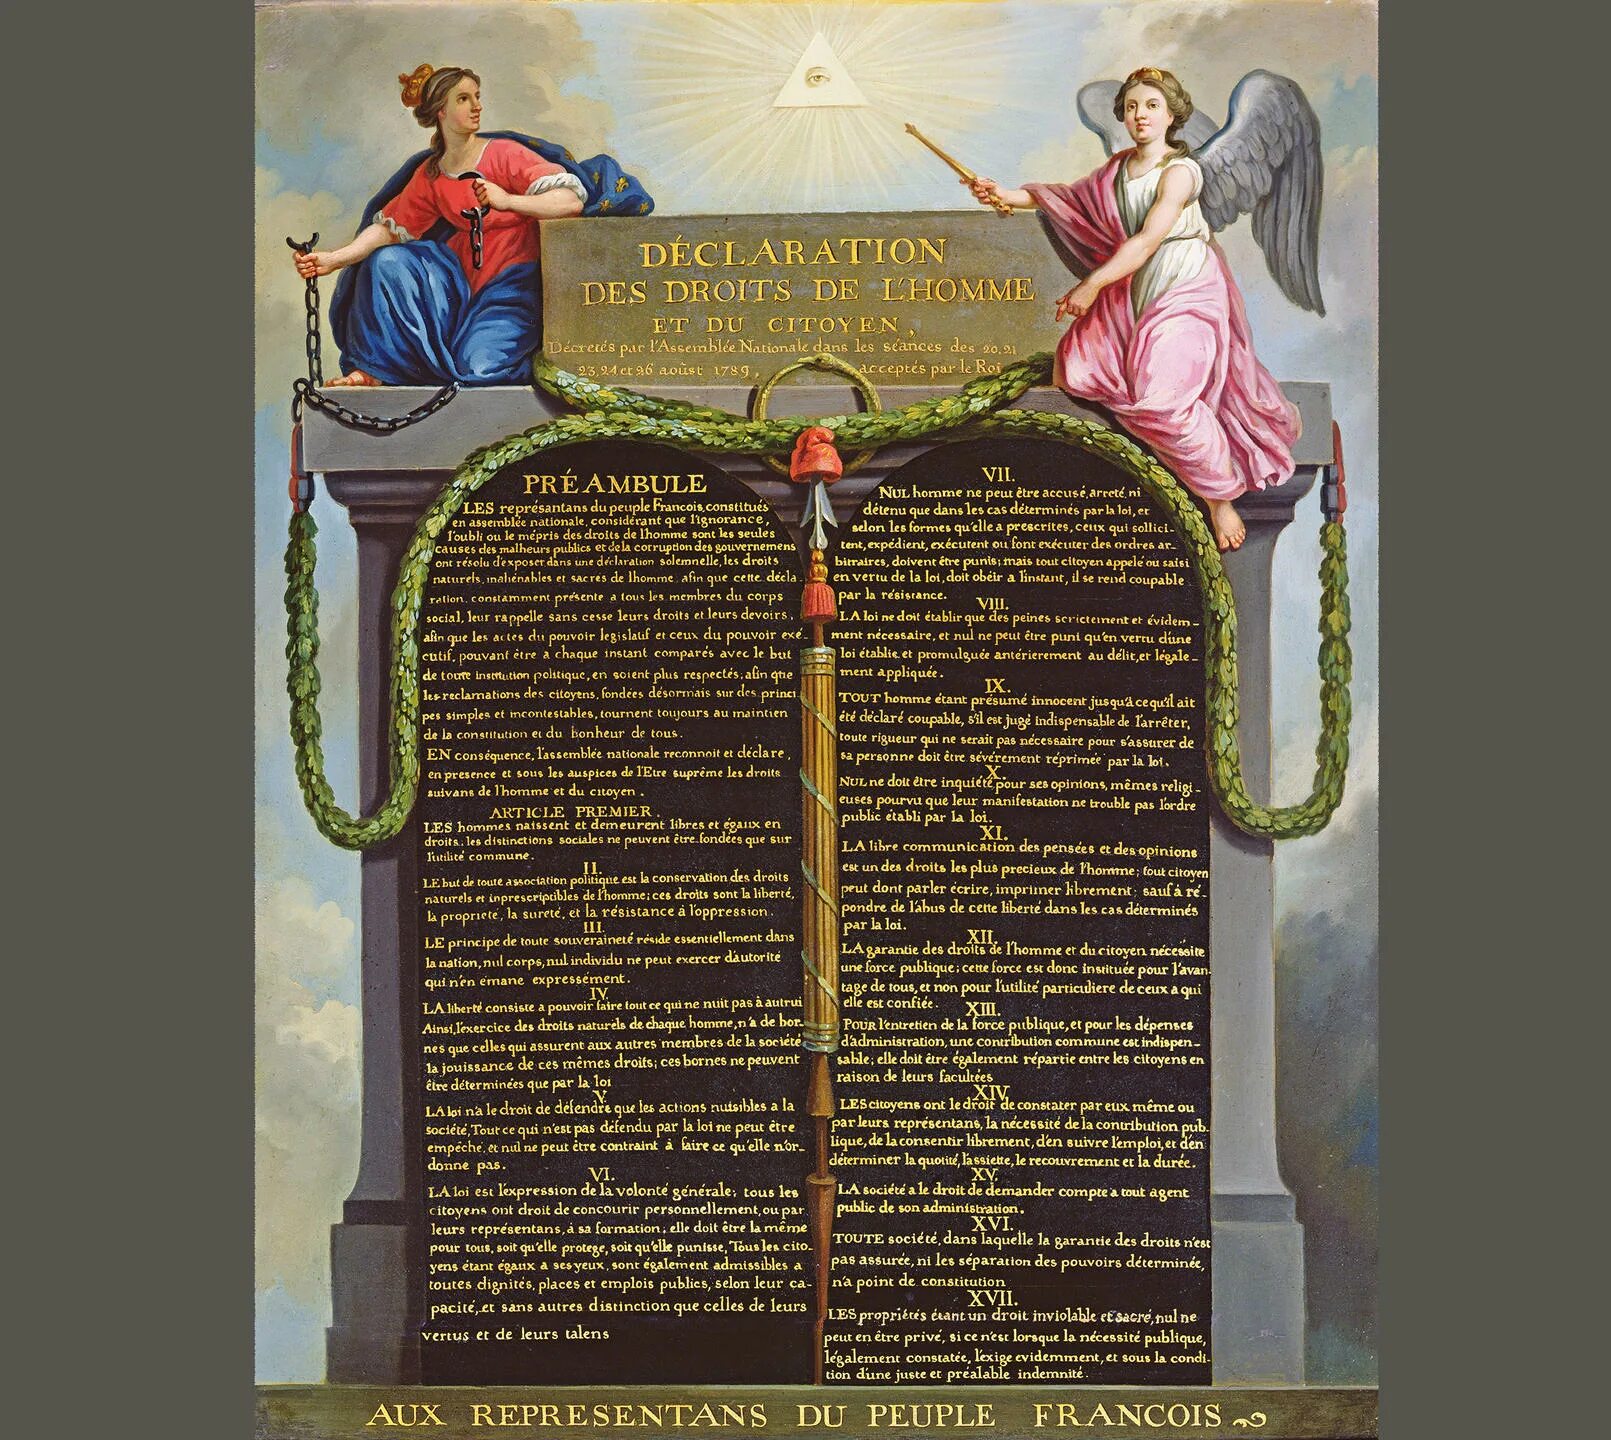 Декларация прав человека и гражданина во Франции 1789. Французская декларация прав человека и гражданина 1789 г. Декларация прав человека и гражданина 1793 г. Декларация прав человека и гражданина во Франции 26 августа.